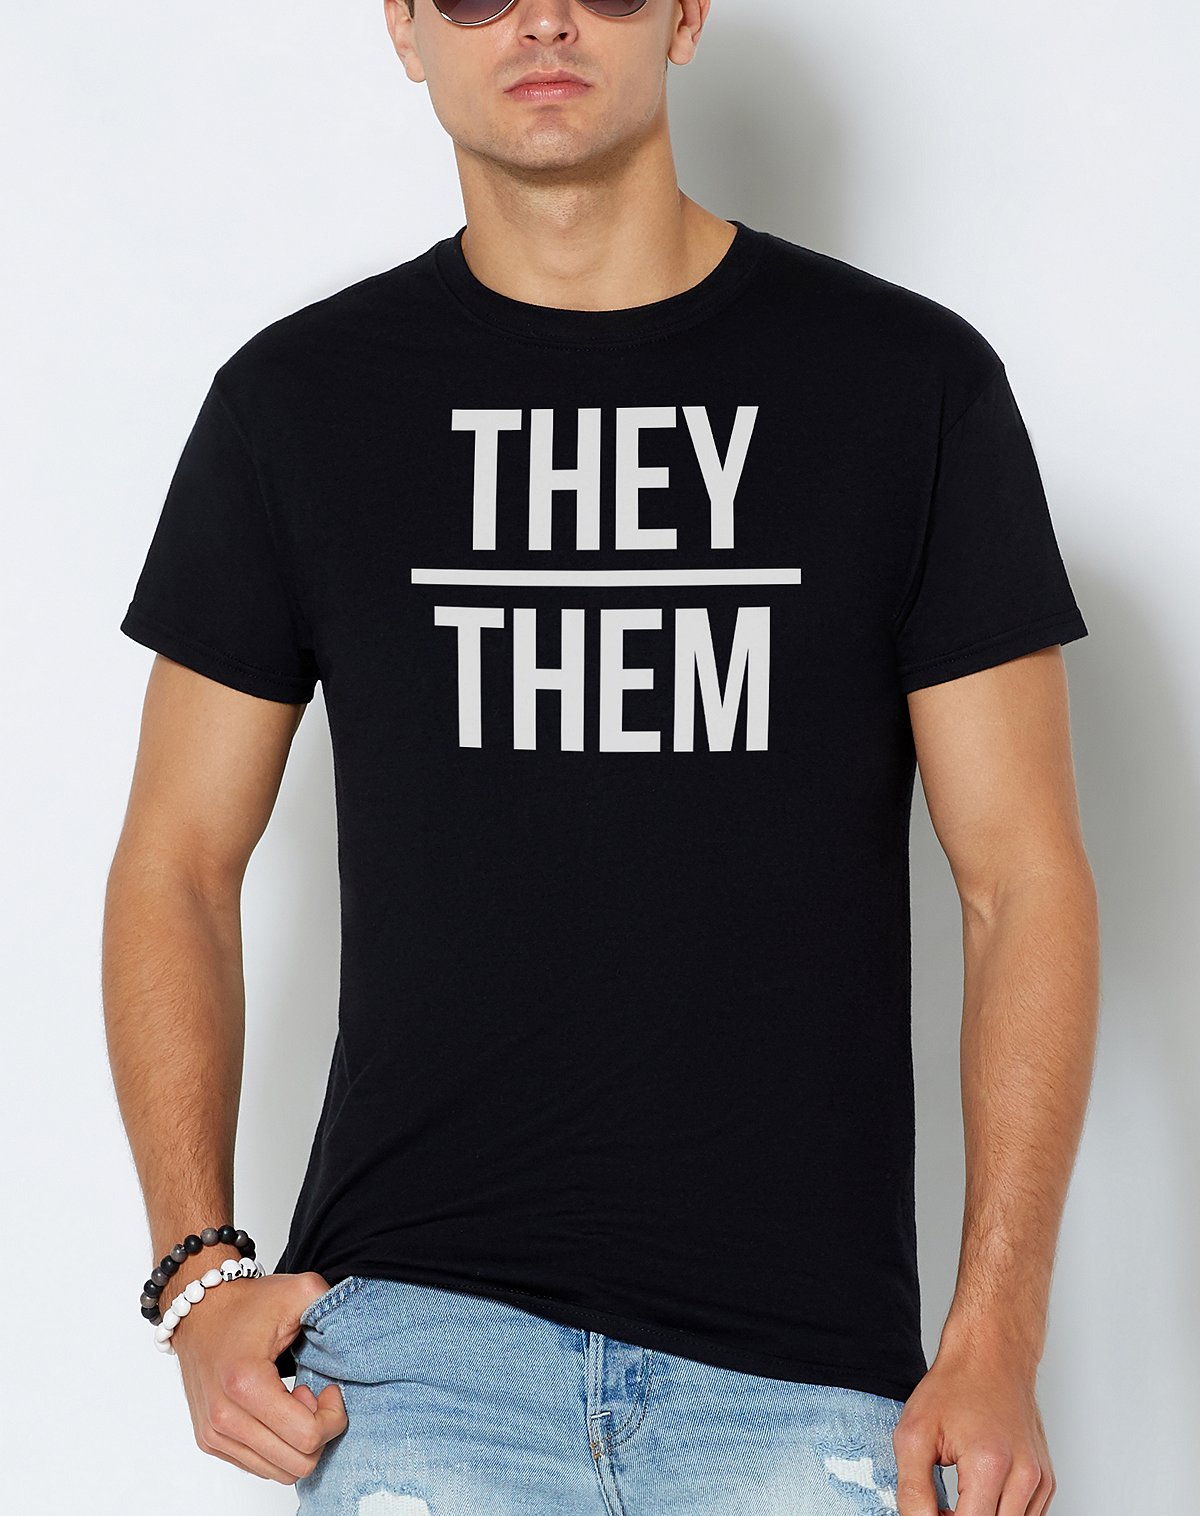 They/Them Pronouns T Shirt